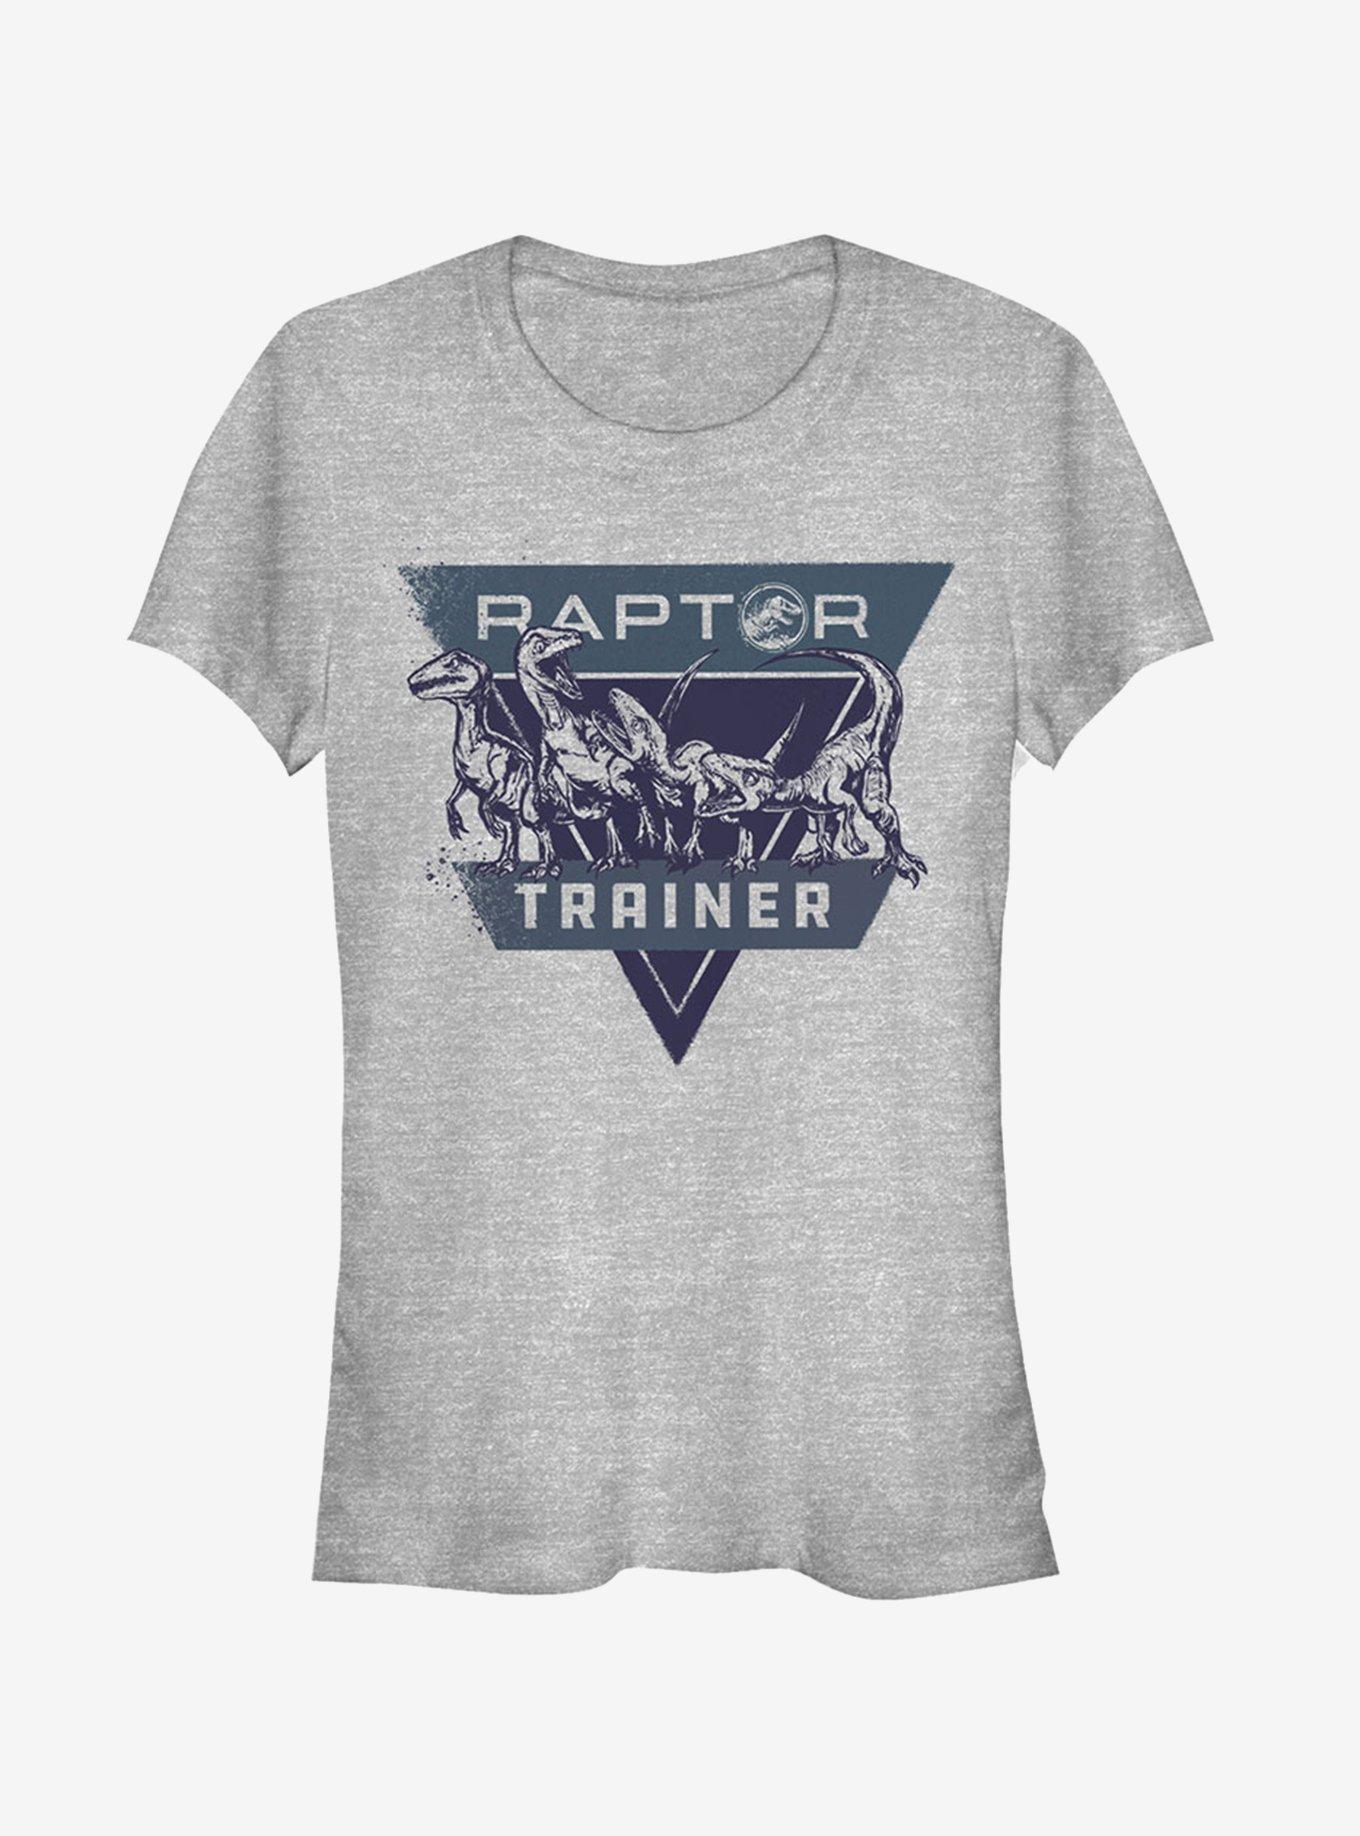 Jurassic World Fallen Kingdom Raptor Trainer Girls T-Shirt